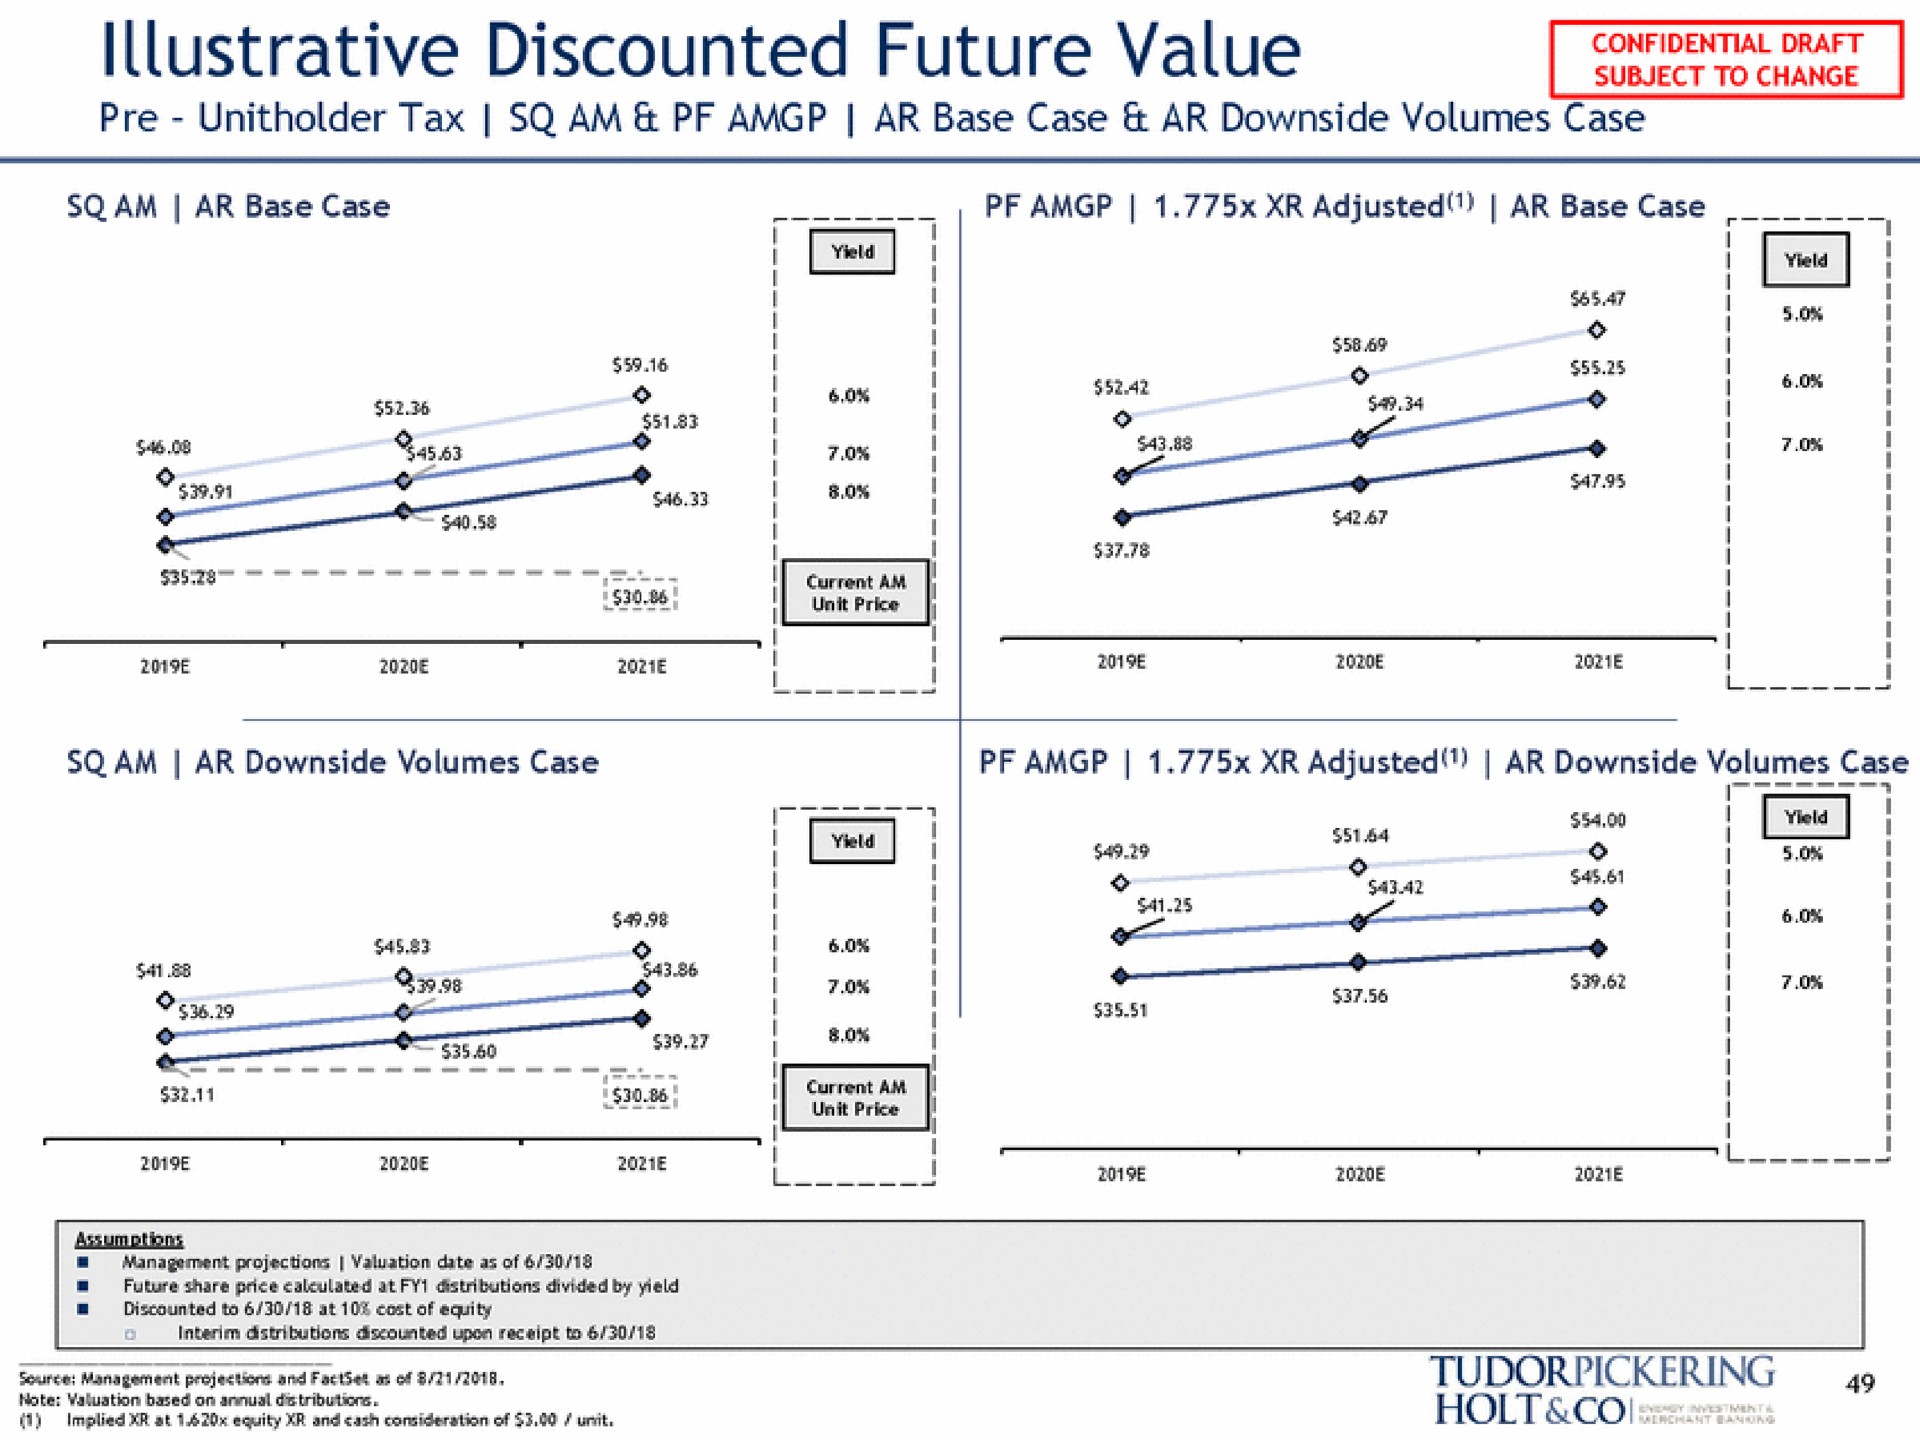 illustrative discounted future value i i | Tudor, Pickering, Holt & Co